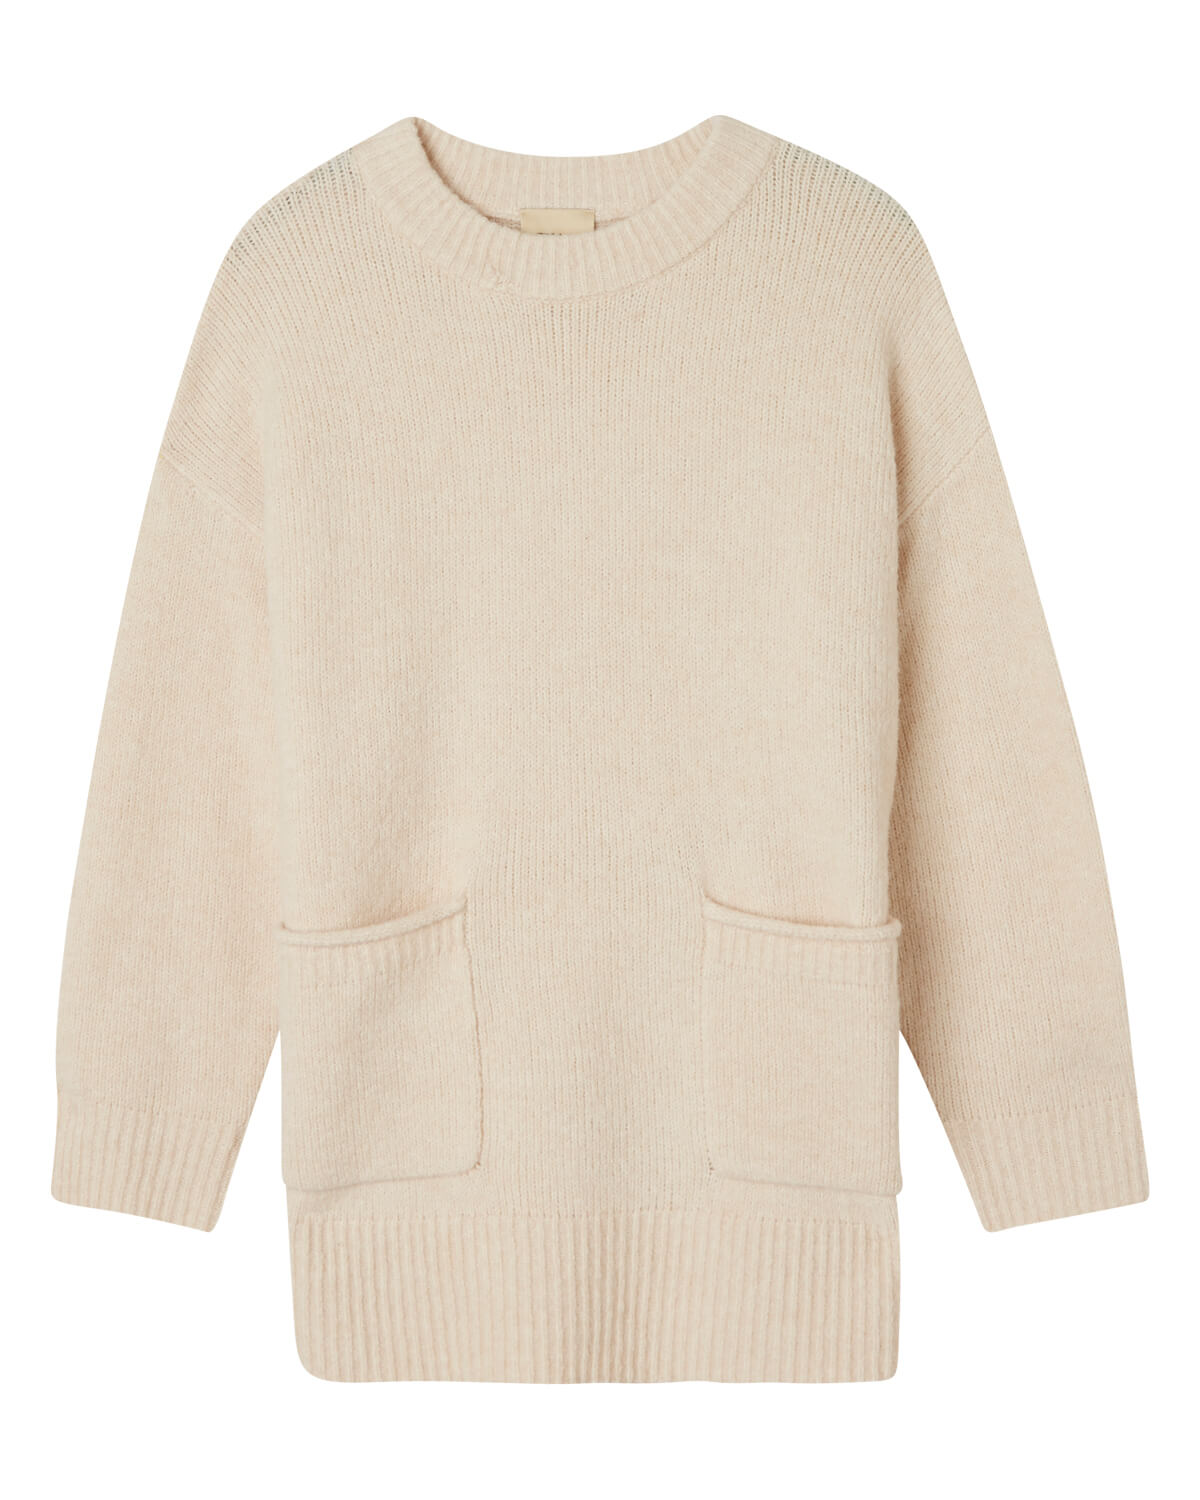 Shop Crew Neck Jersey Pullover Sweater | Elie Elie Tahari | JANE + MERCER